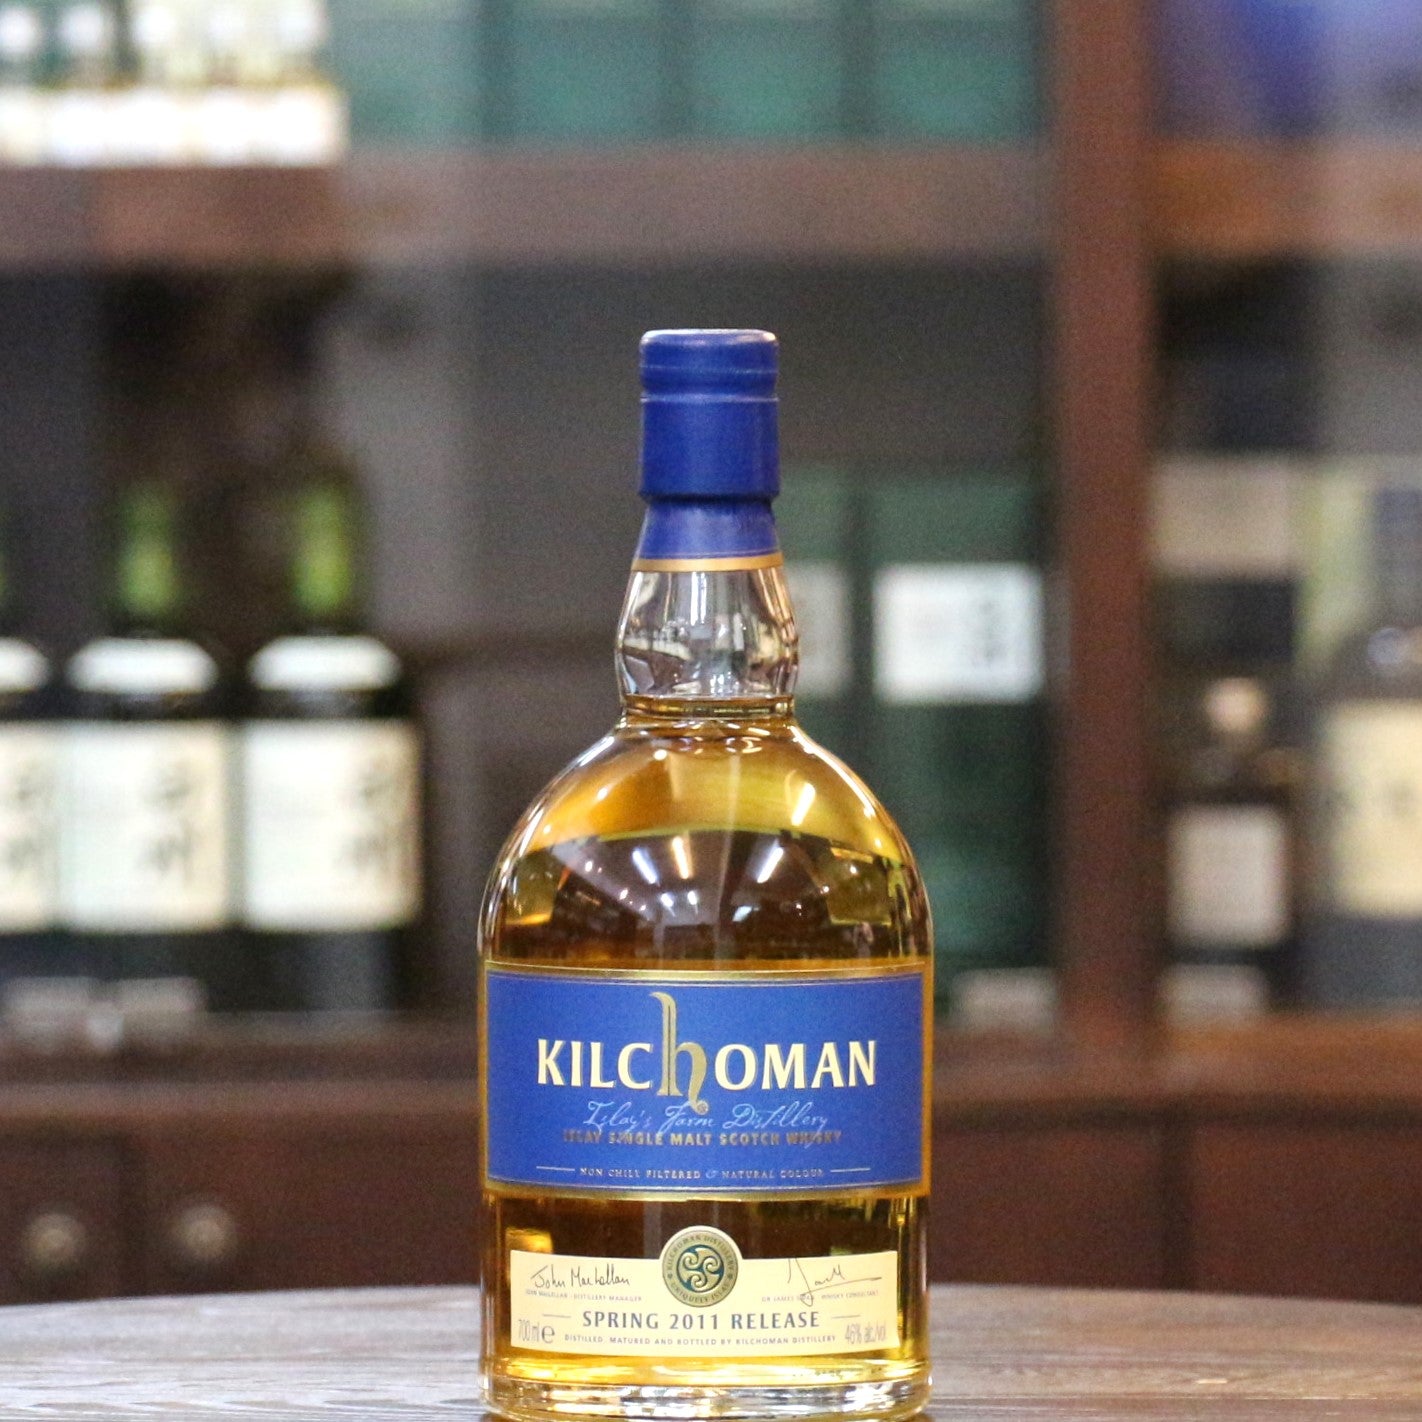 Kilchoman Spring 2011 Release Islay Single Malt Scotch Whisky